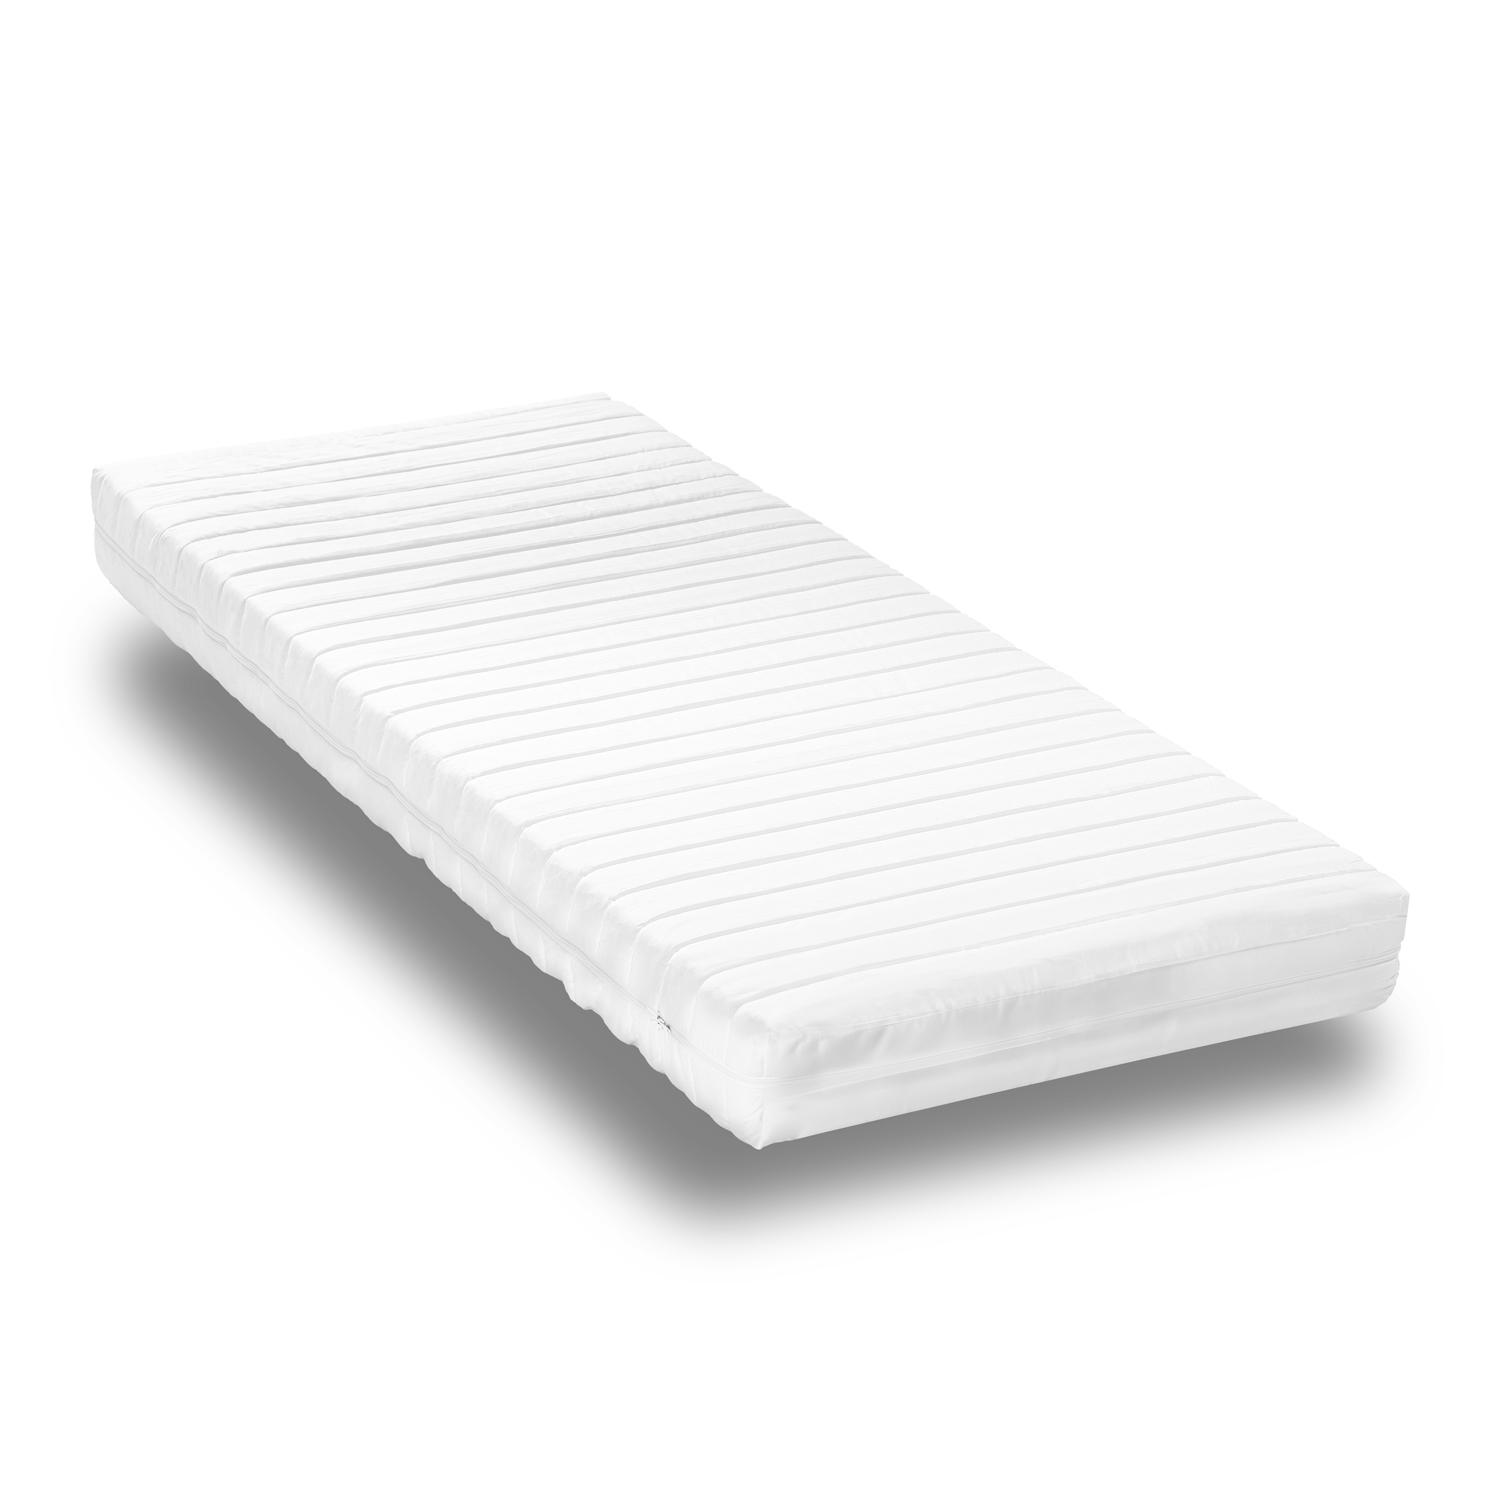 Cold foam mattress K16 80 x 200 cm, height 16 cm, firmness level H2/H3